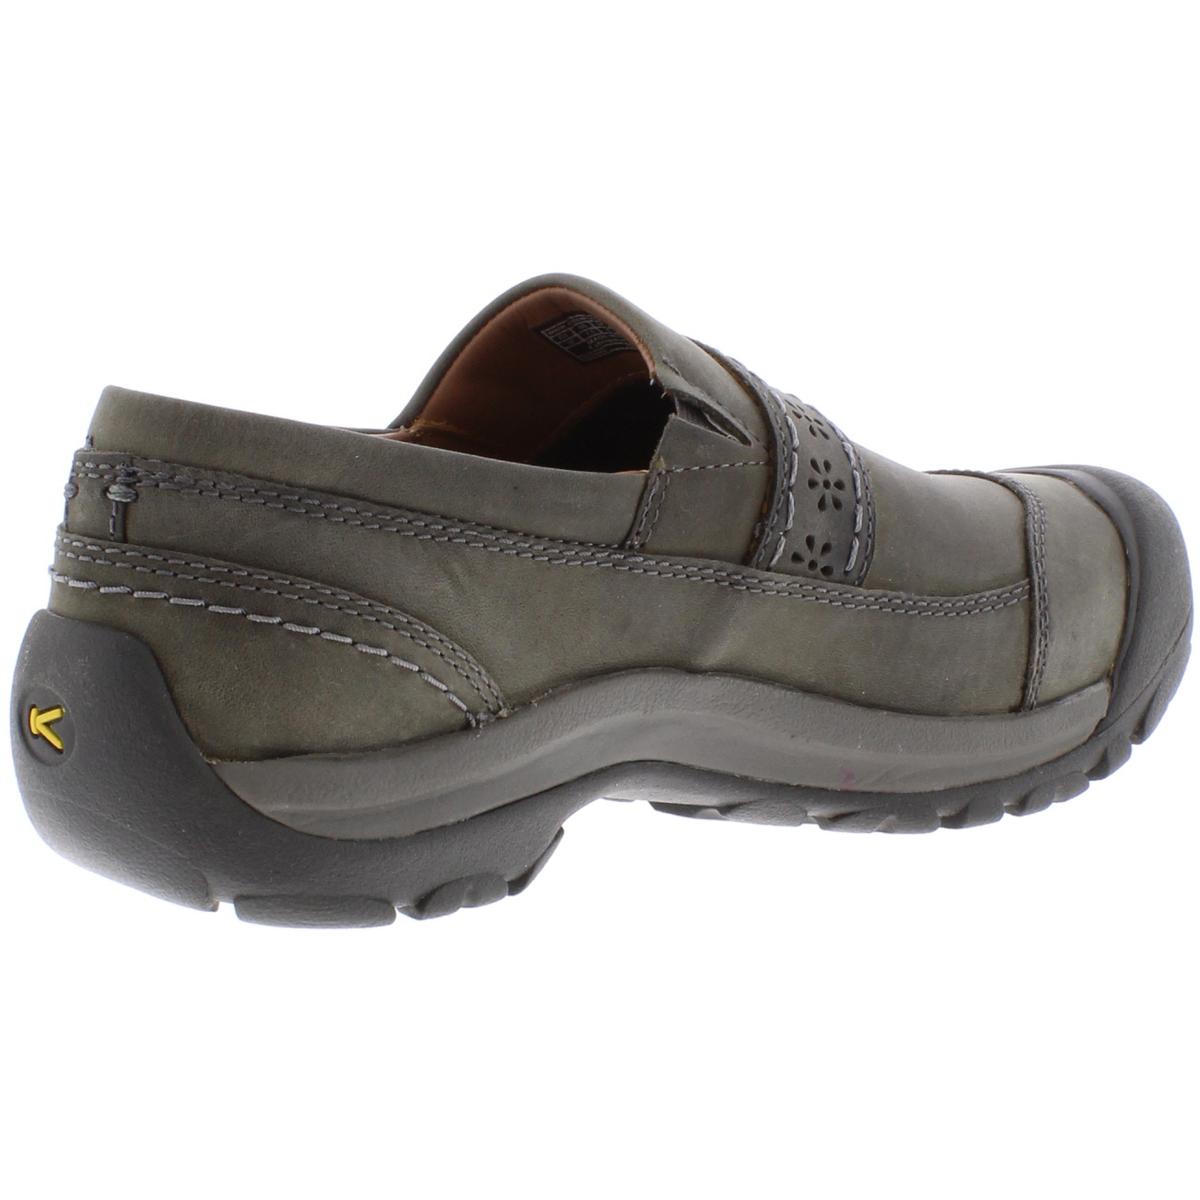 Keen Womens Kaci II Gray Slip-On Sneakers Shoes 7.5 Medium (B,M) BHFO ...